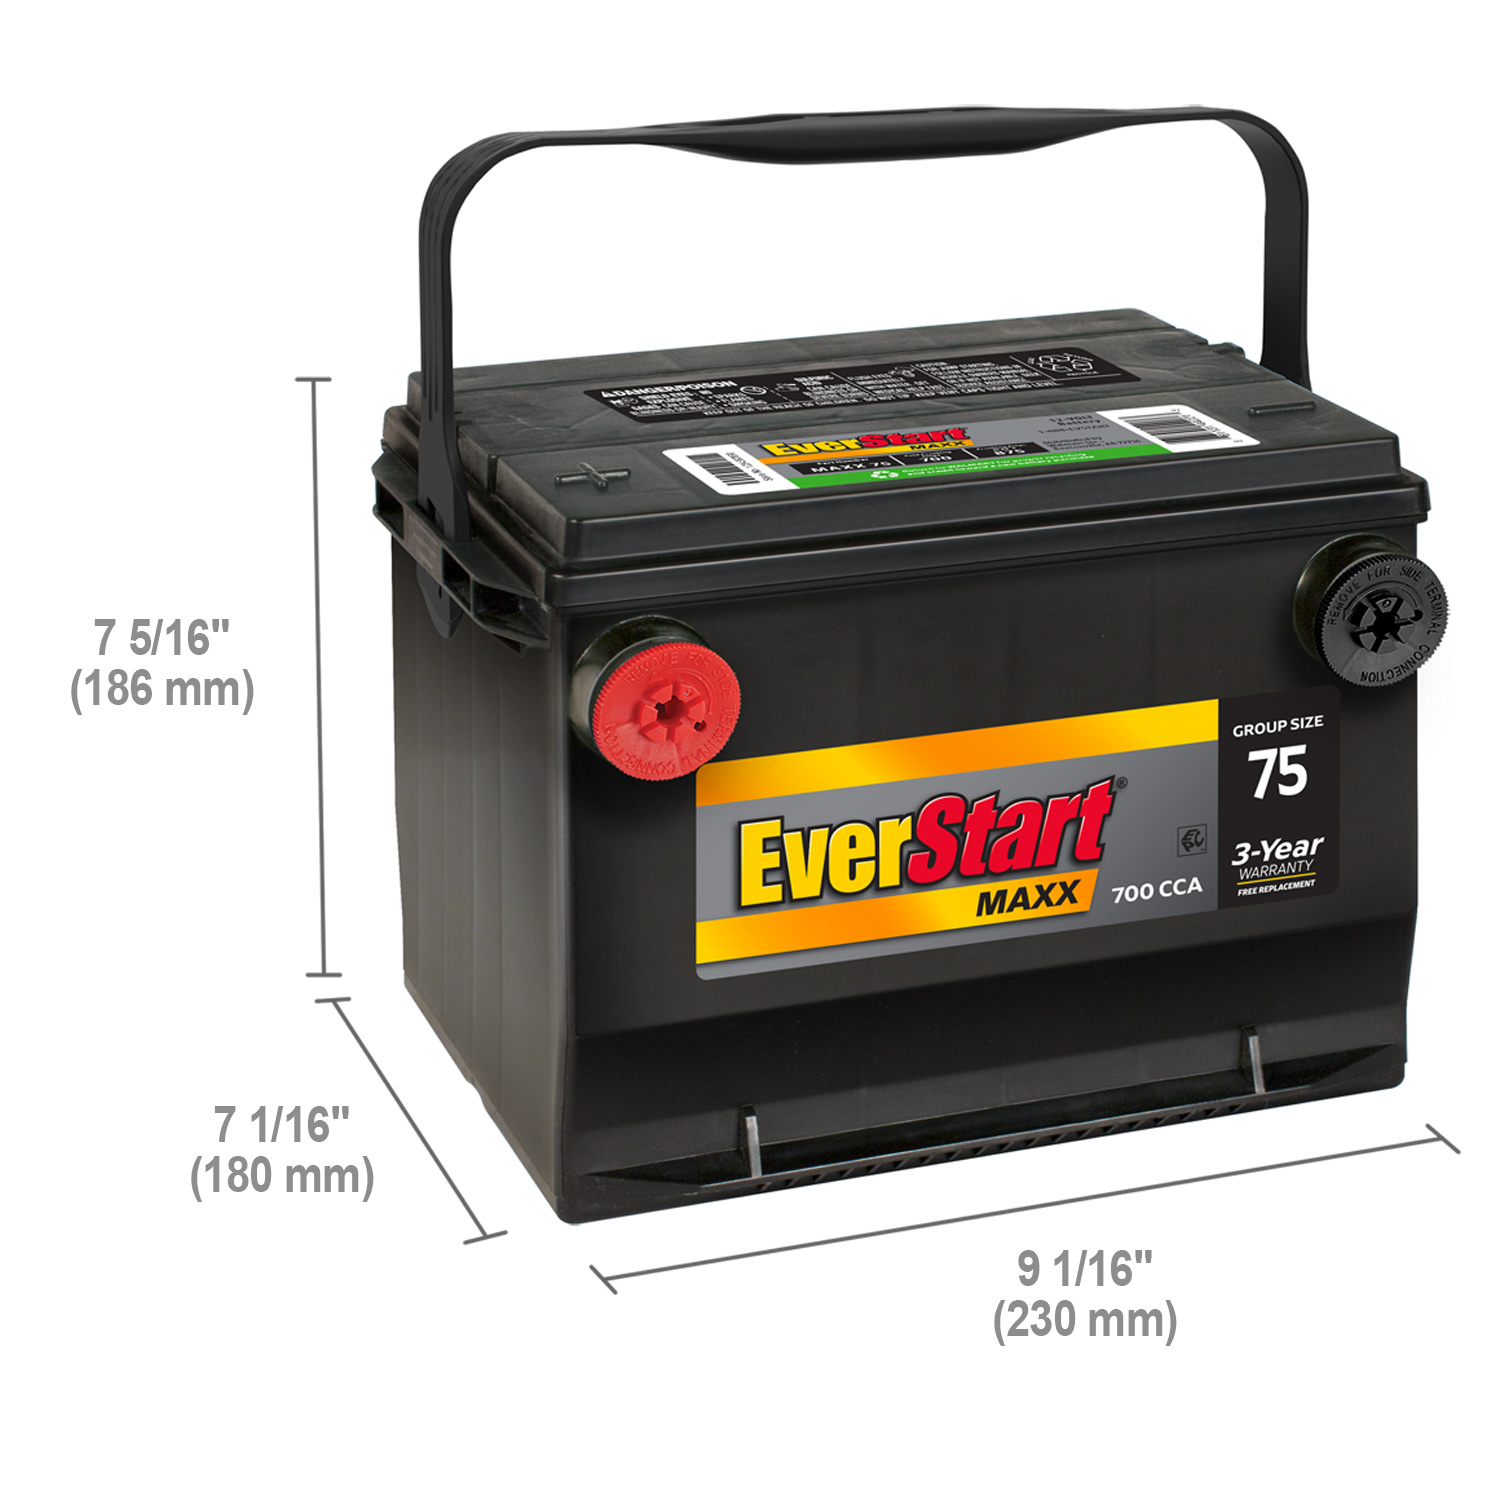 EverStart Maxx Lead Acid Automotive Battery, Group 75 12 Volt, 700 CCA - image 2 of 7